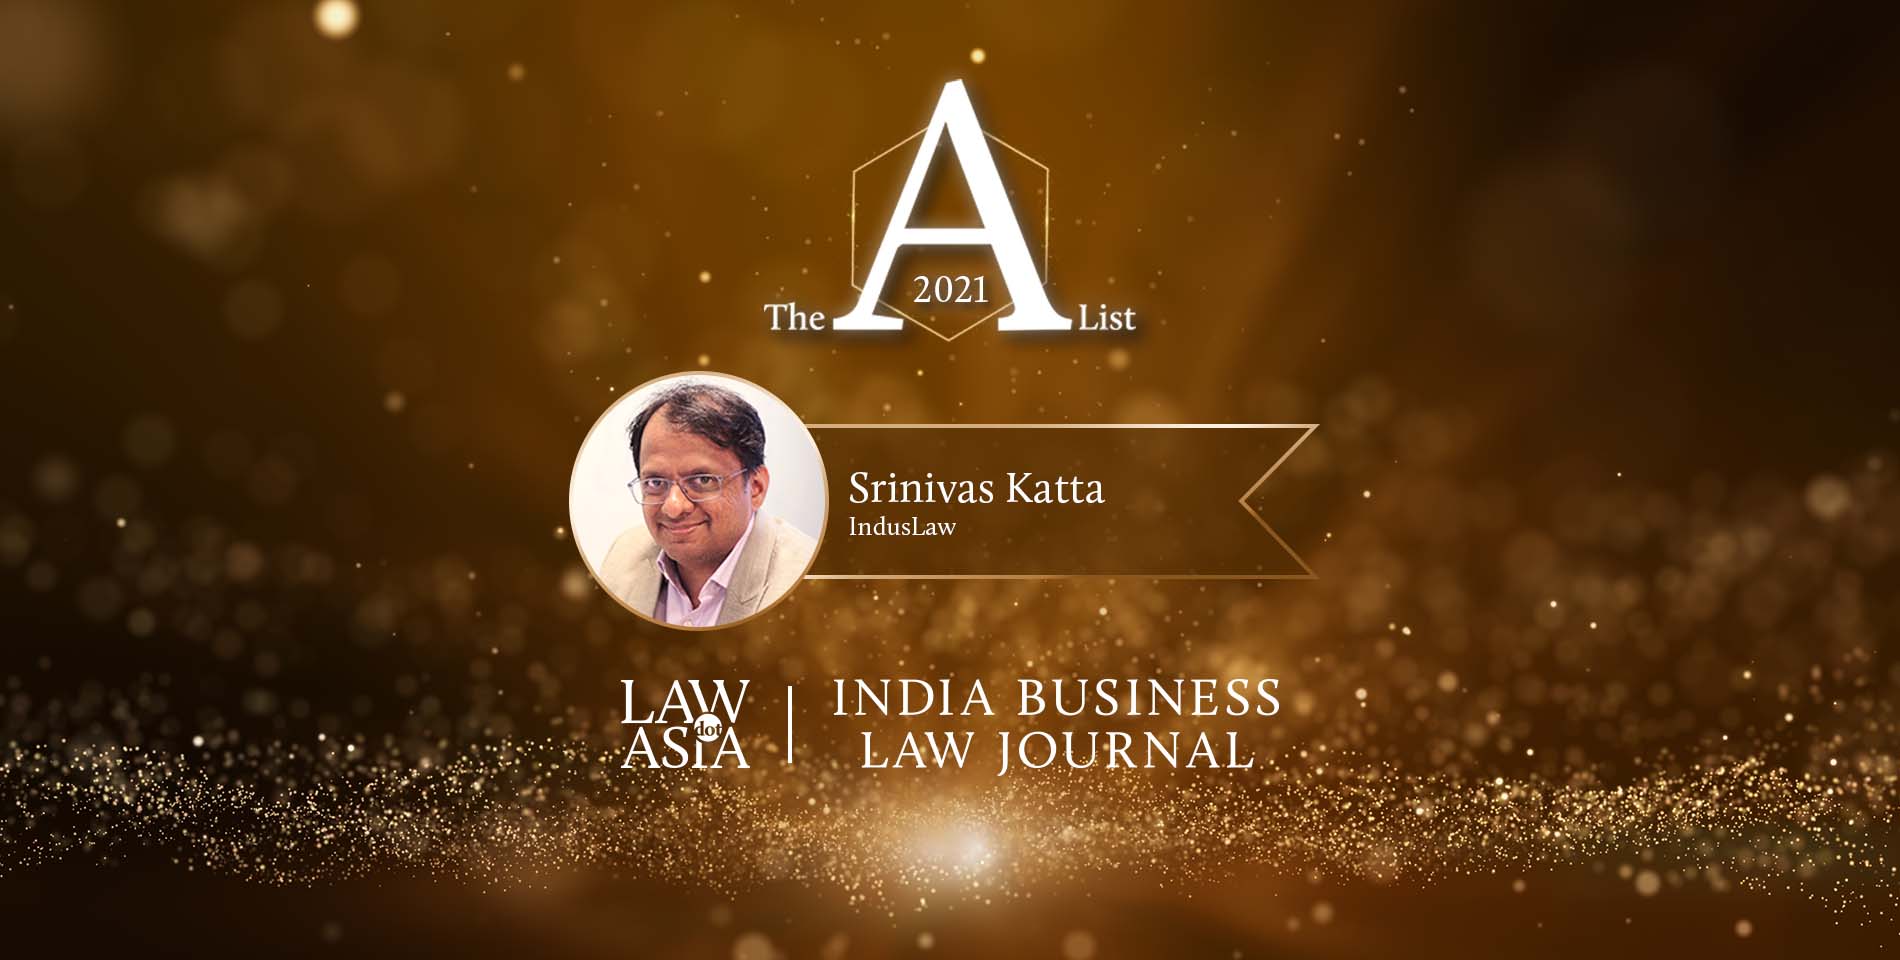 Kinh doanh: Srinivas Katta – IndusLaw – Bengaluru – Hồ sơ luật sư